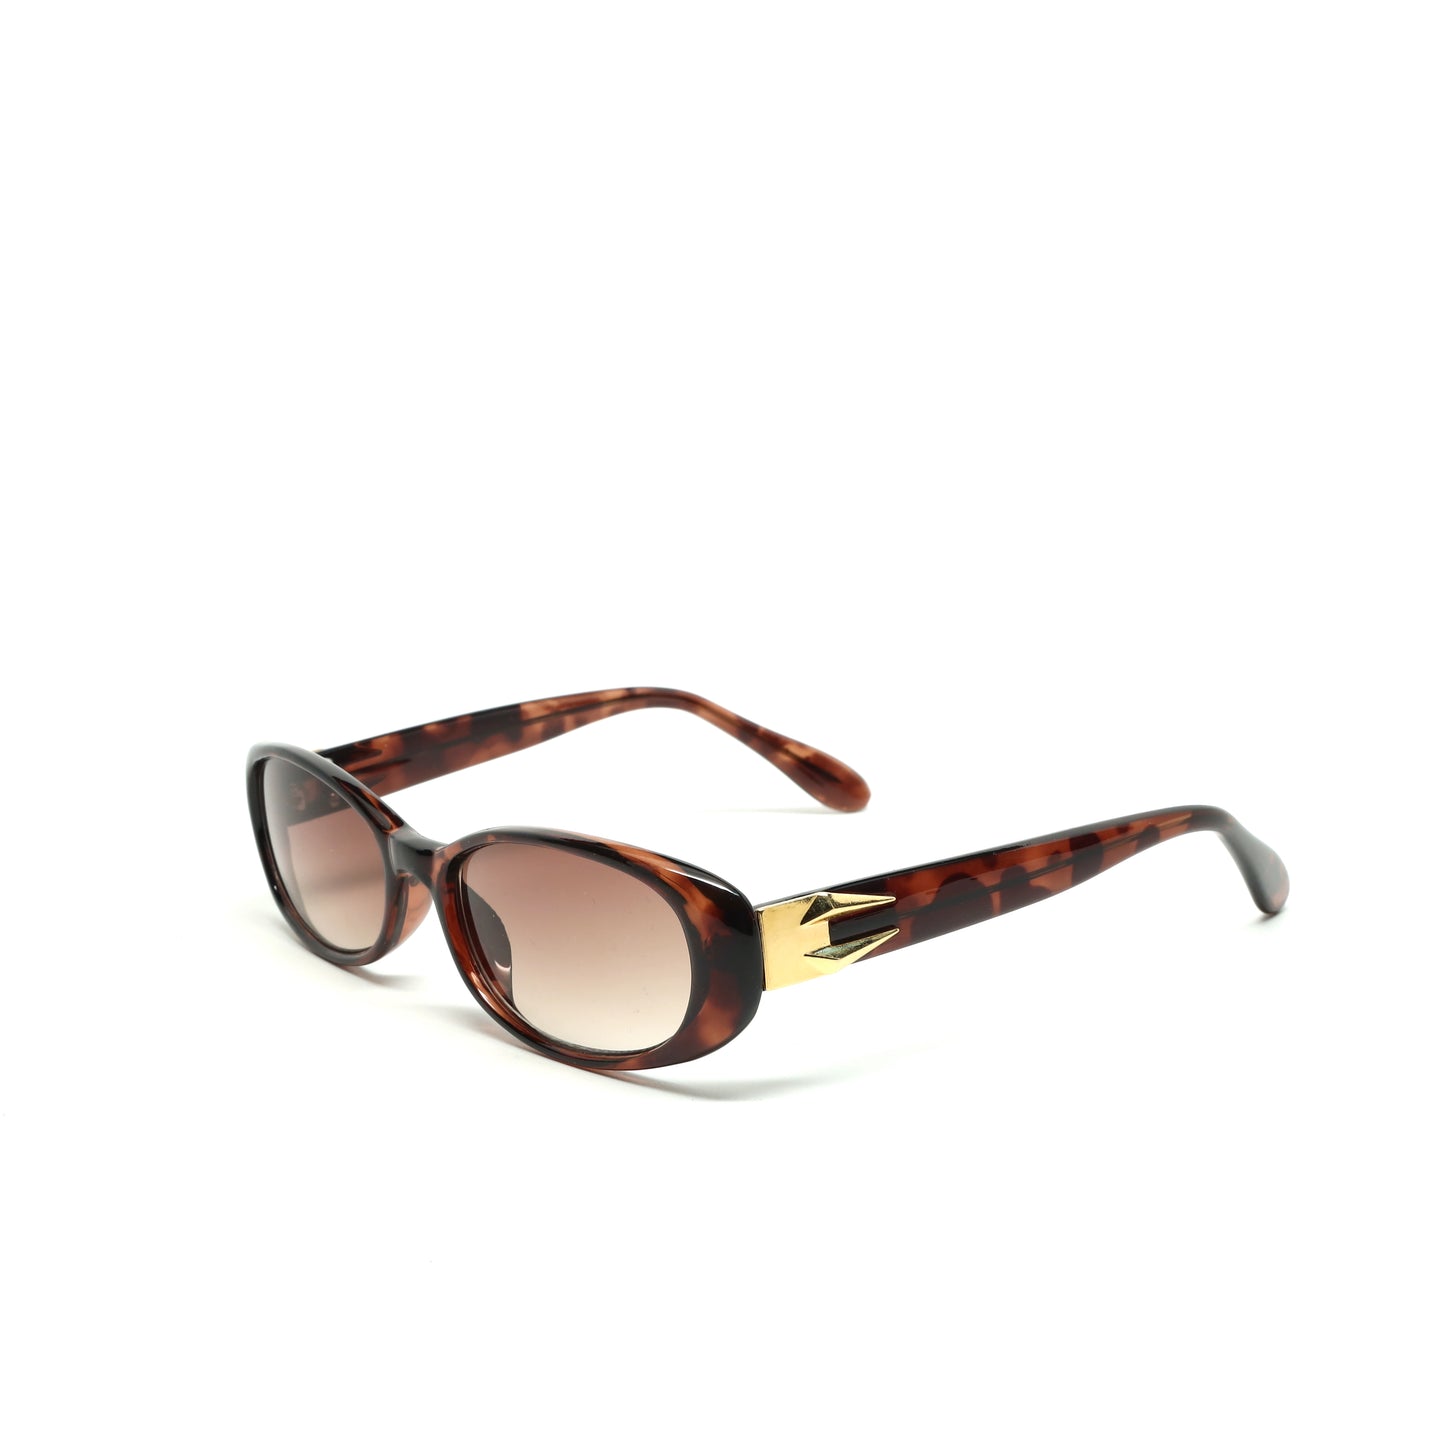 Deluxe Vintage Y2k Standard Chic Wraparound Sunglasses - Tortoise